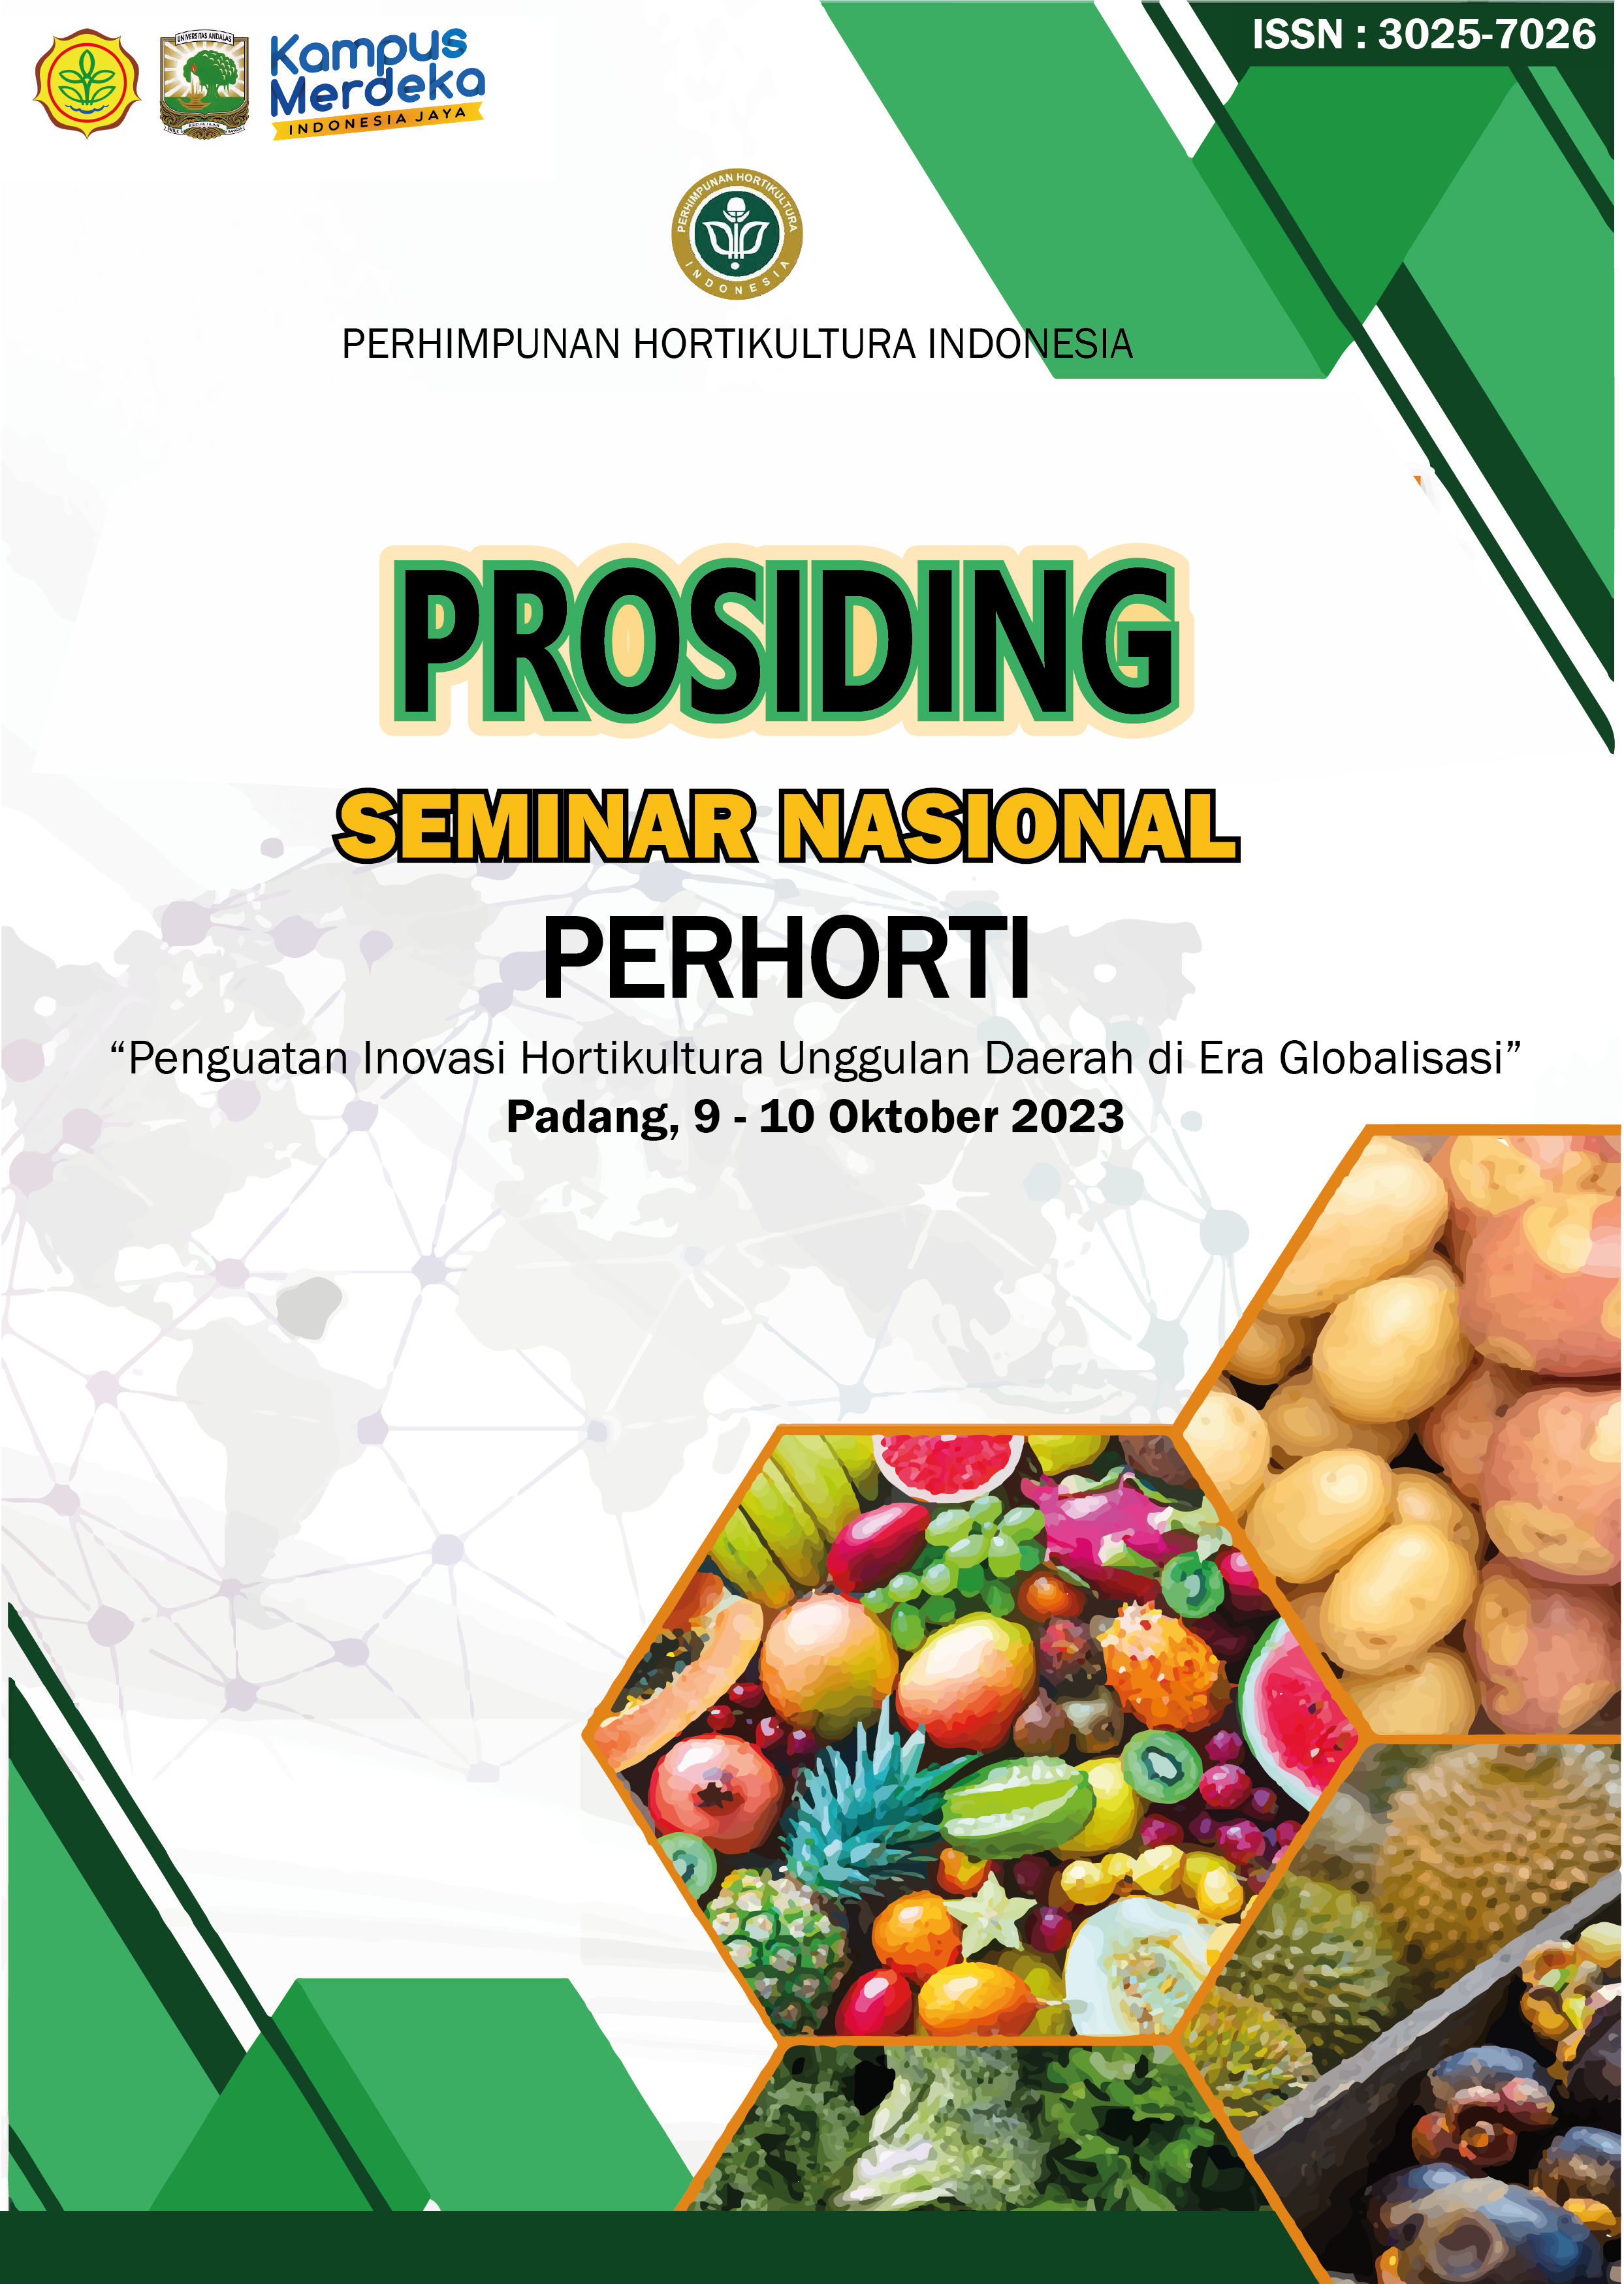 					View Vol. 1 No. 2 (2023): Prosiding Seminar Nasional Hortikultura 2023
				